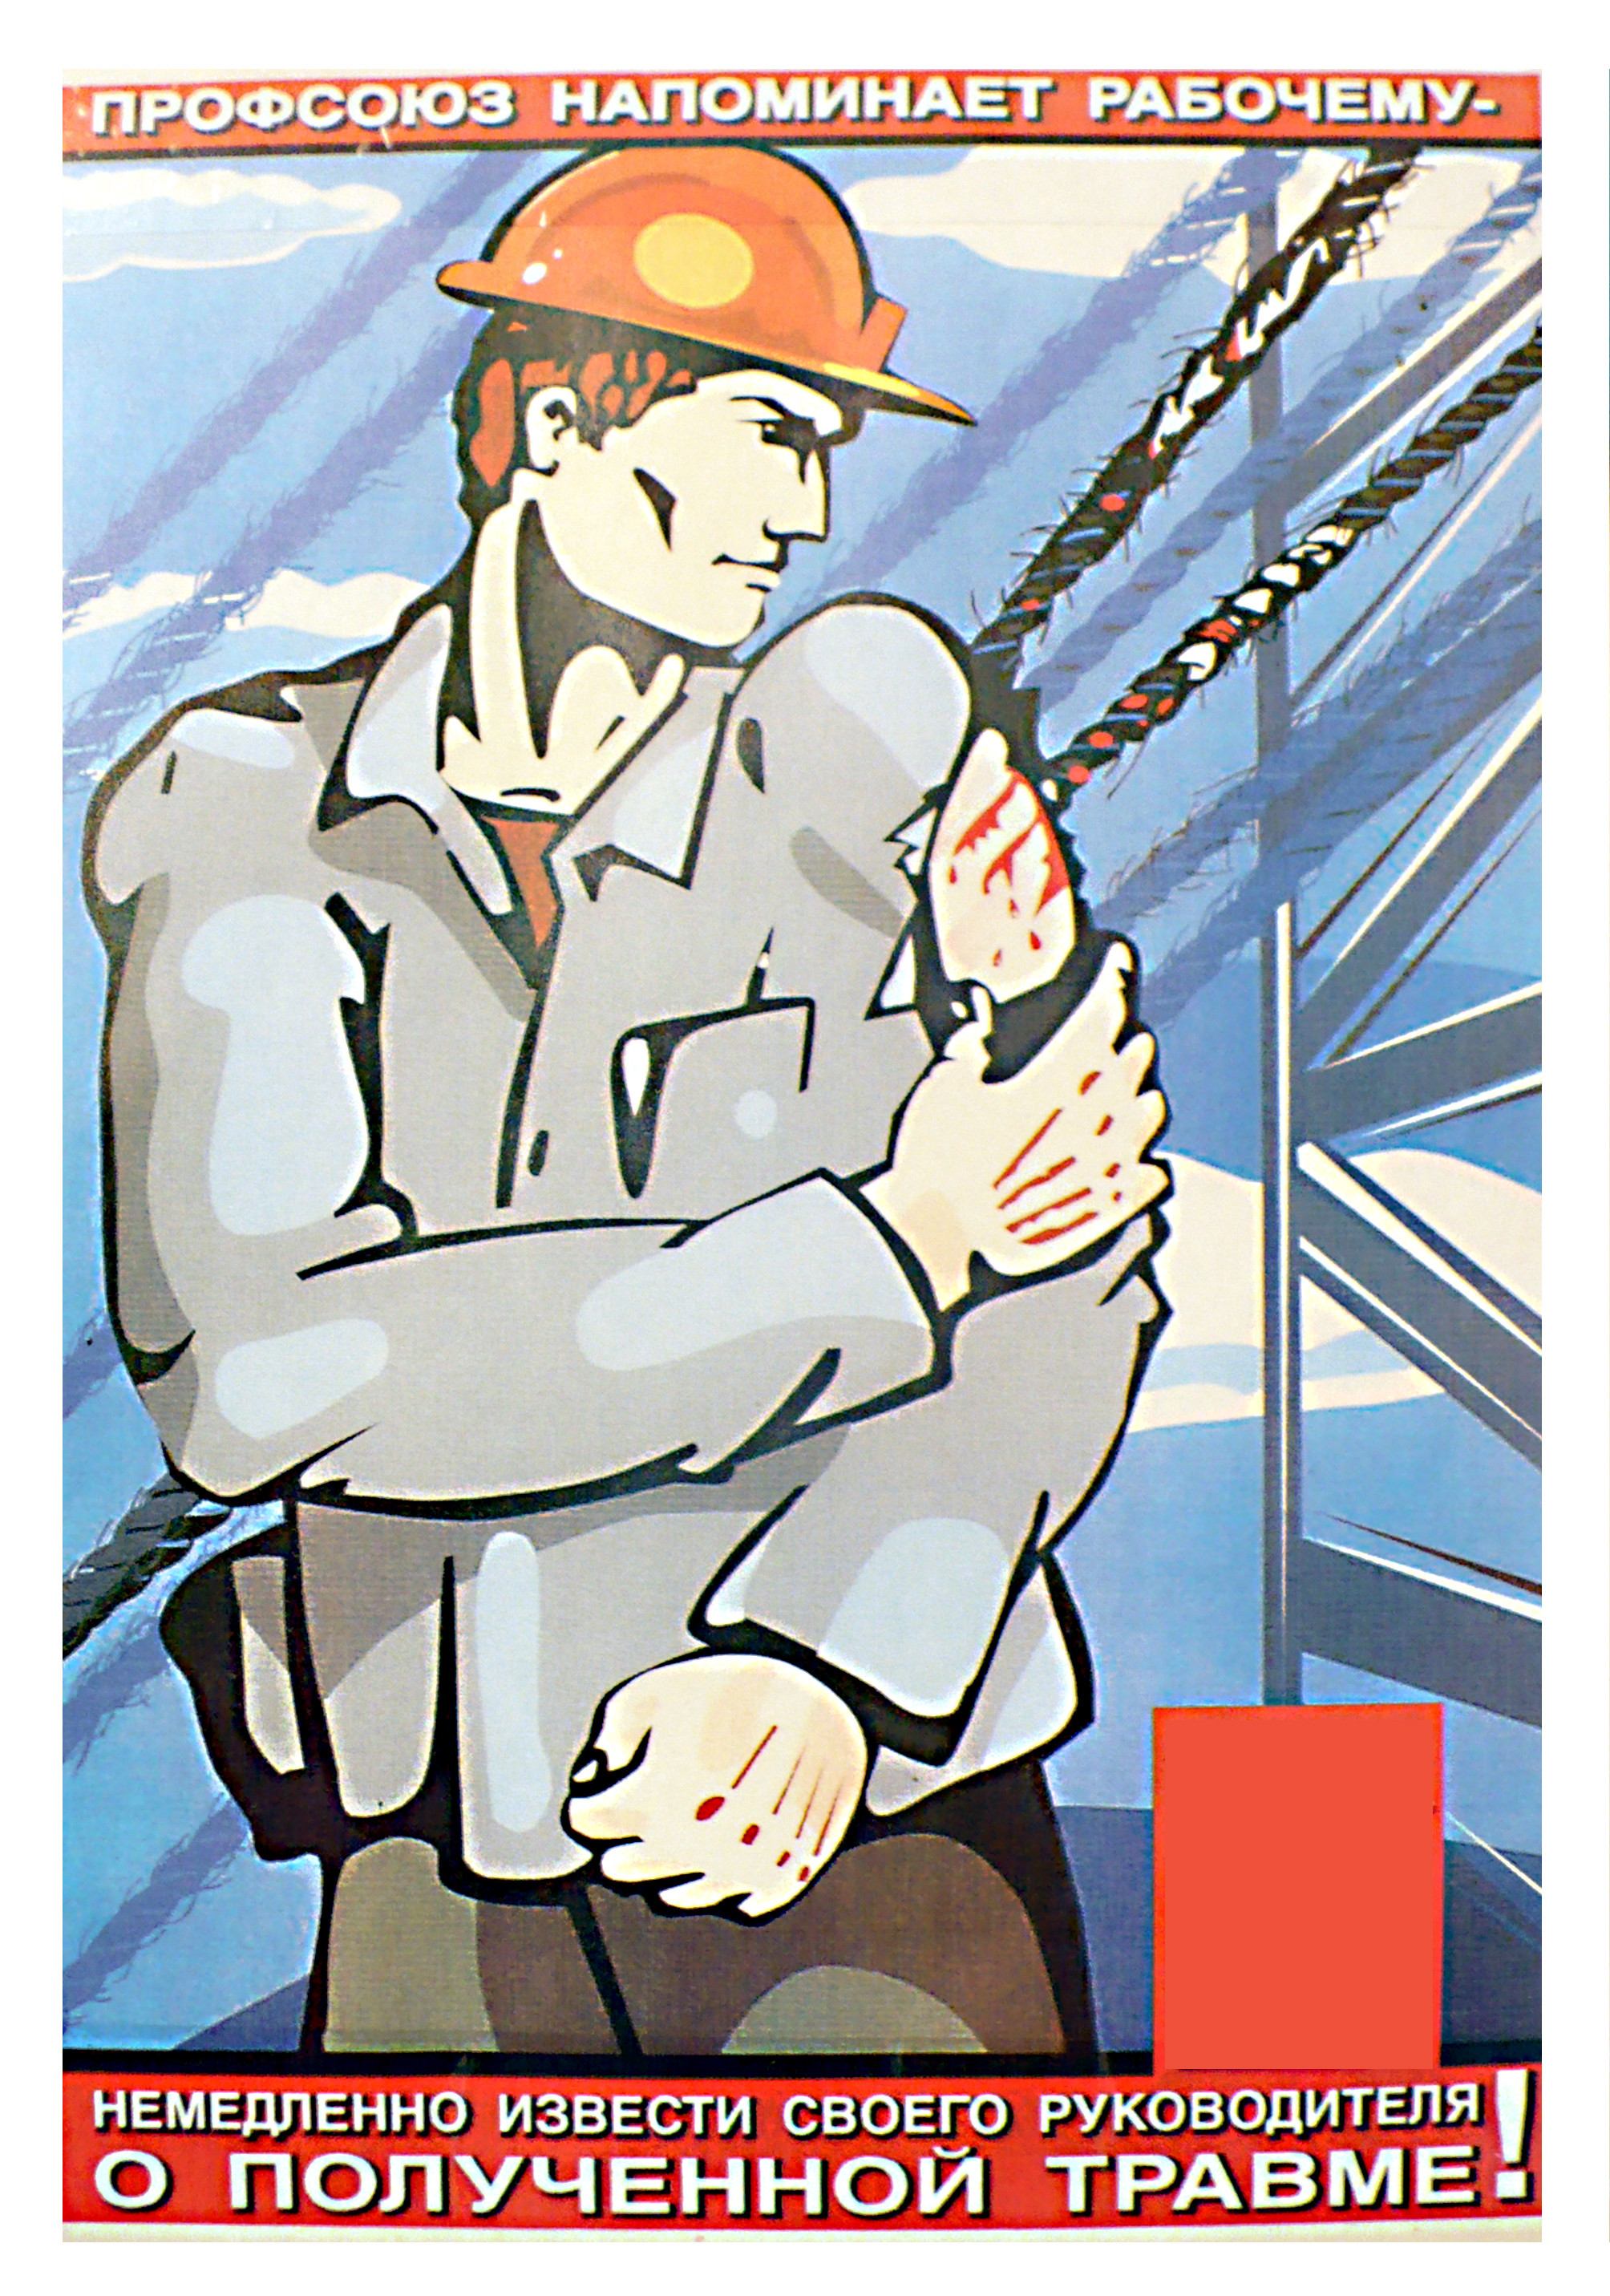 Найти техника безопасности. Охрана труда. Плакаты по технике безопасности. Техника безопасности на производстве. Советские плакаты о безопасности труда.